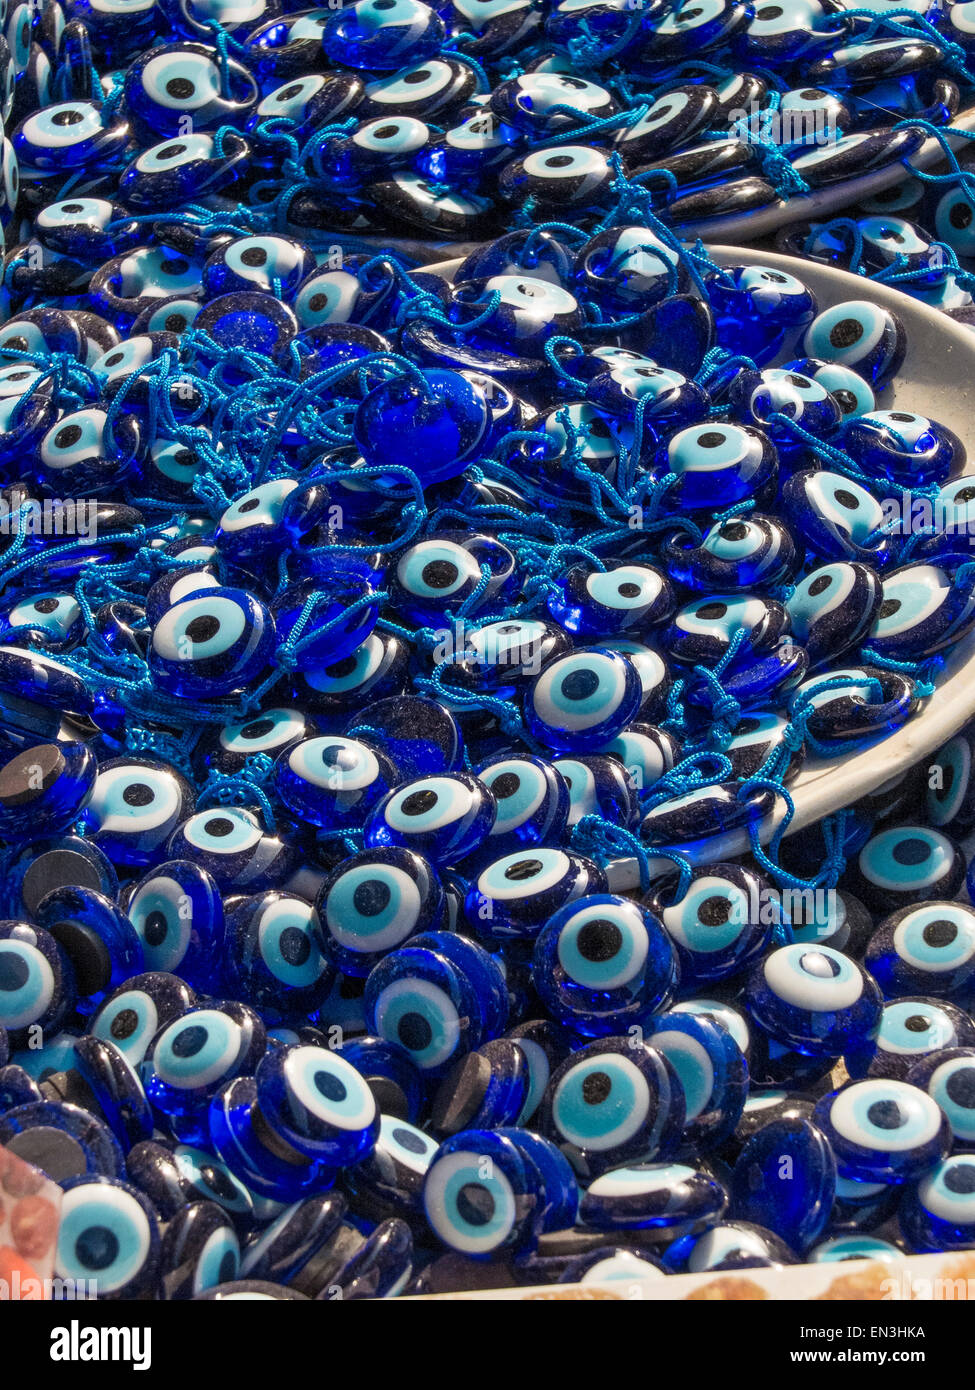 El mal de ojo, The evil eye — Na'atik Language & Culture Institute